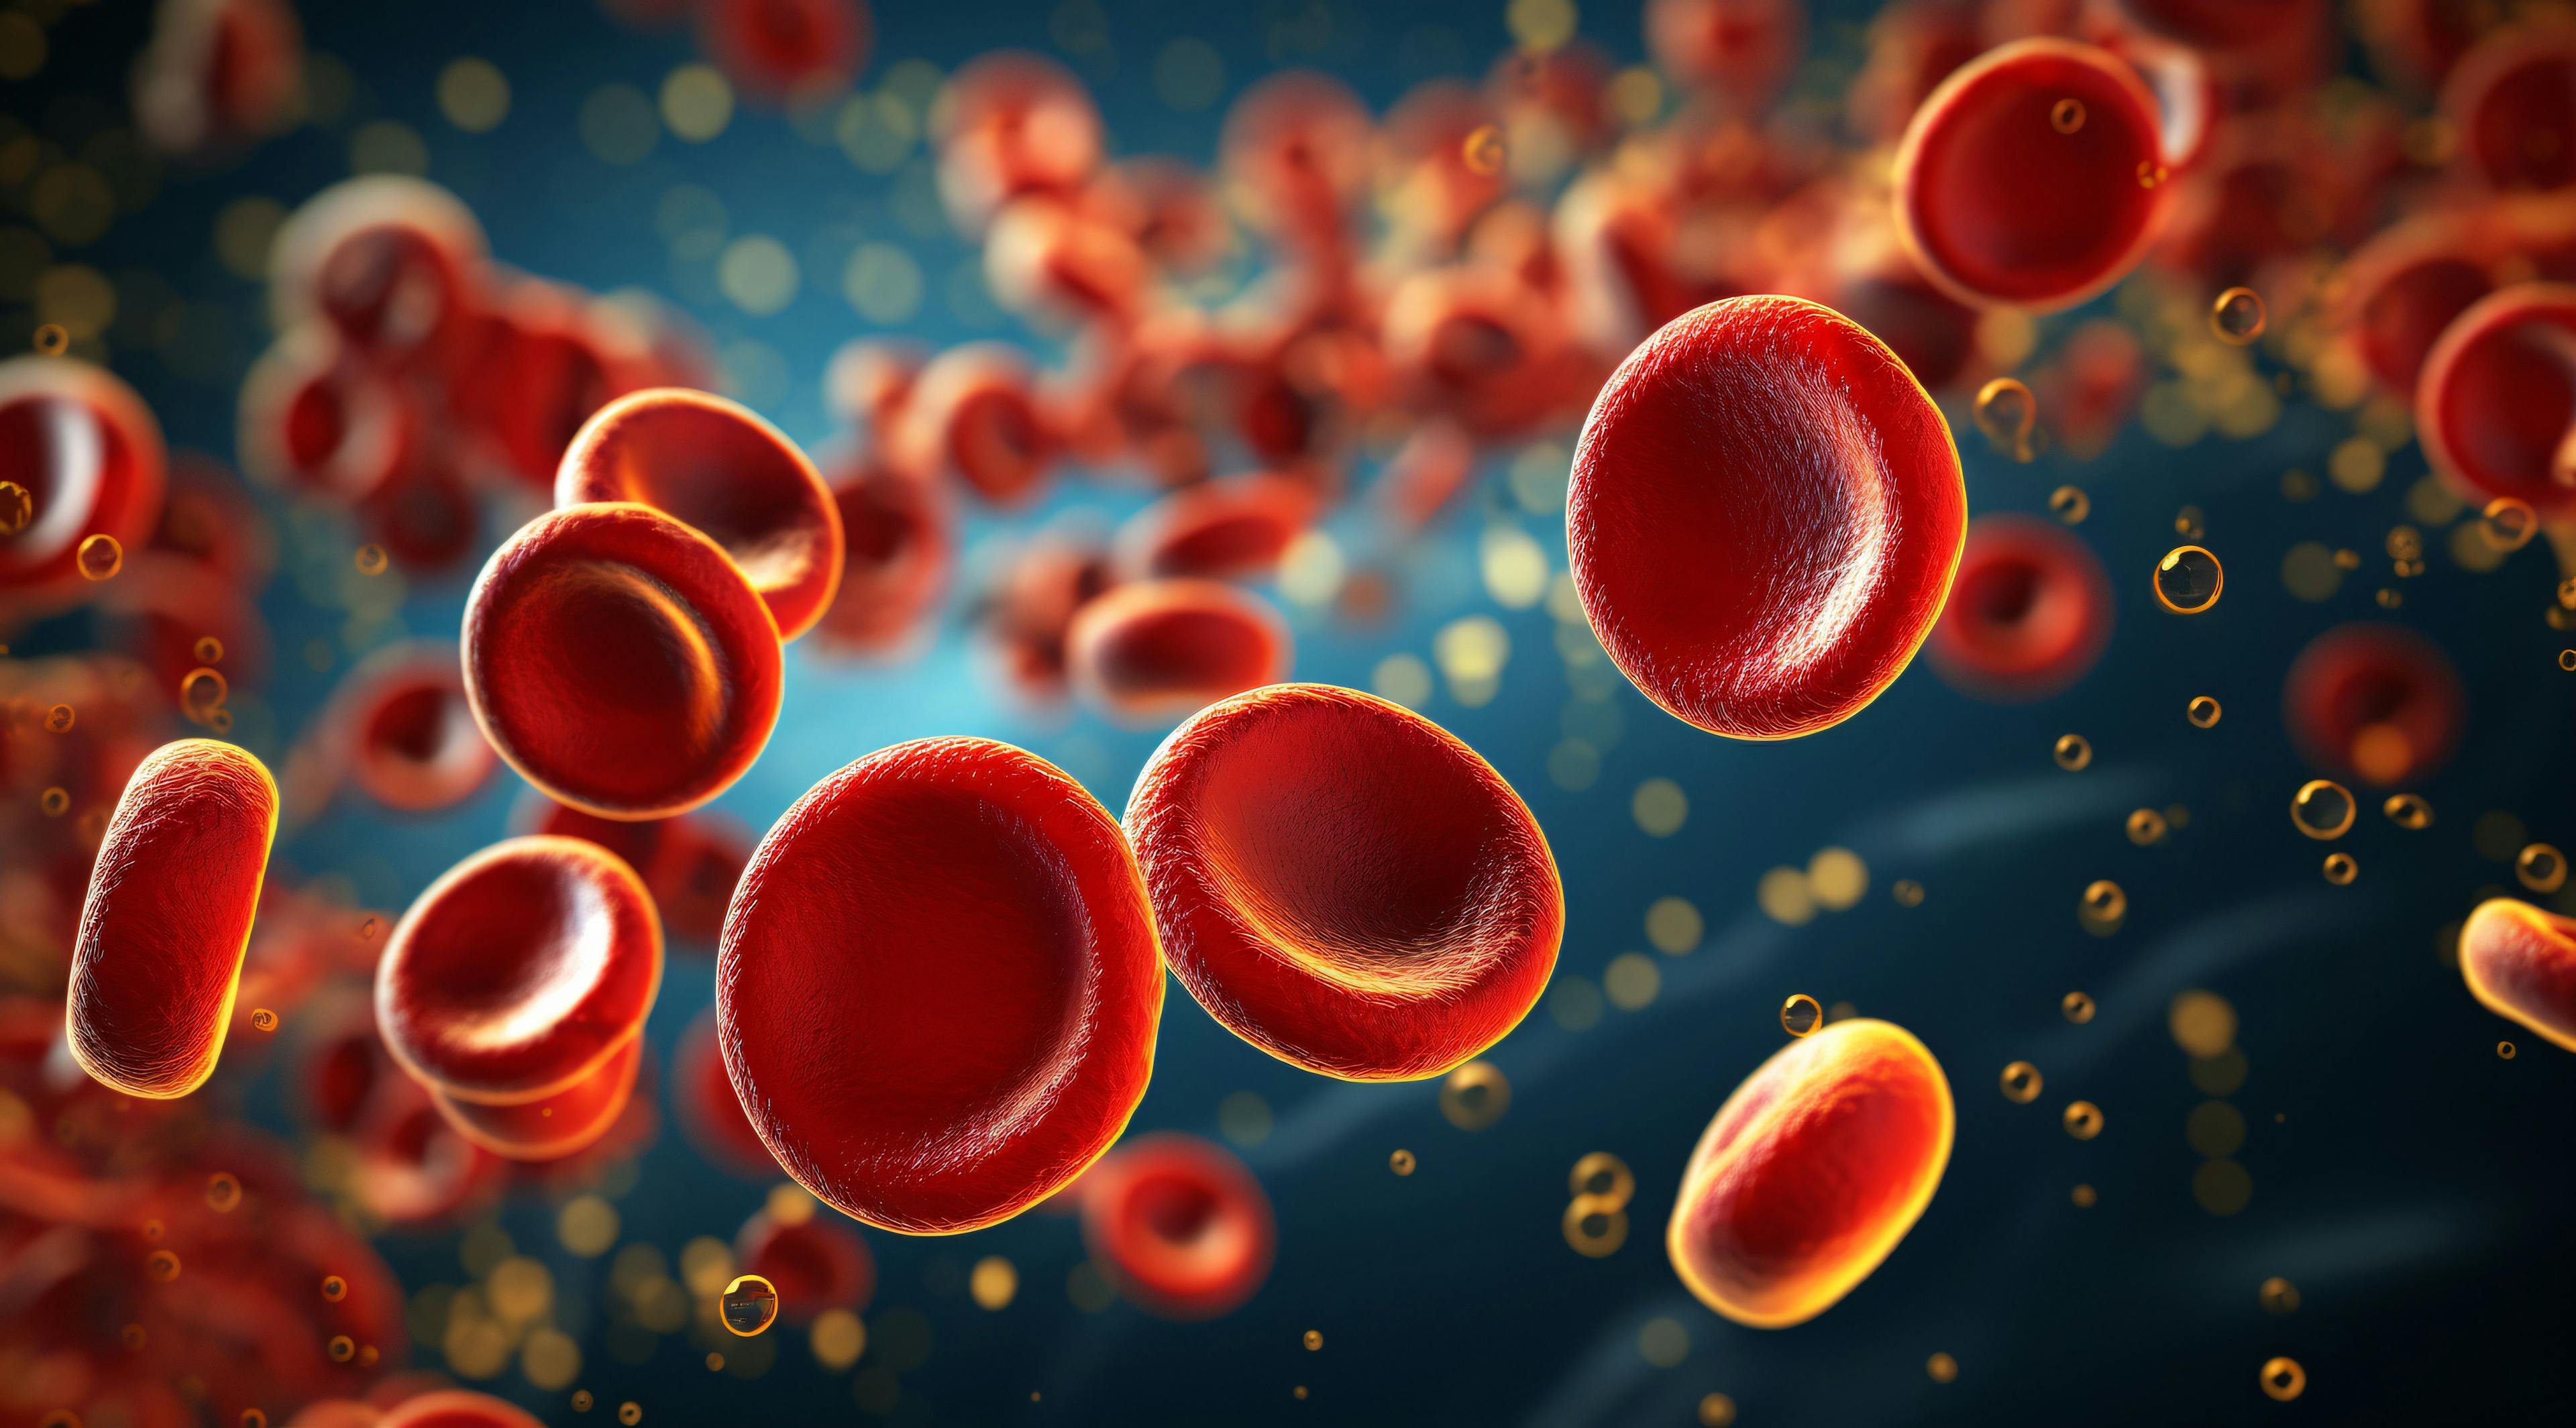 red blood cells flowing realistic 3d rendering: © Kodjovi - stock.adobe.com